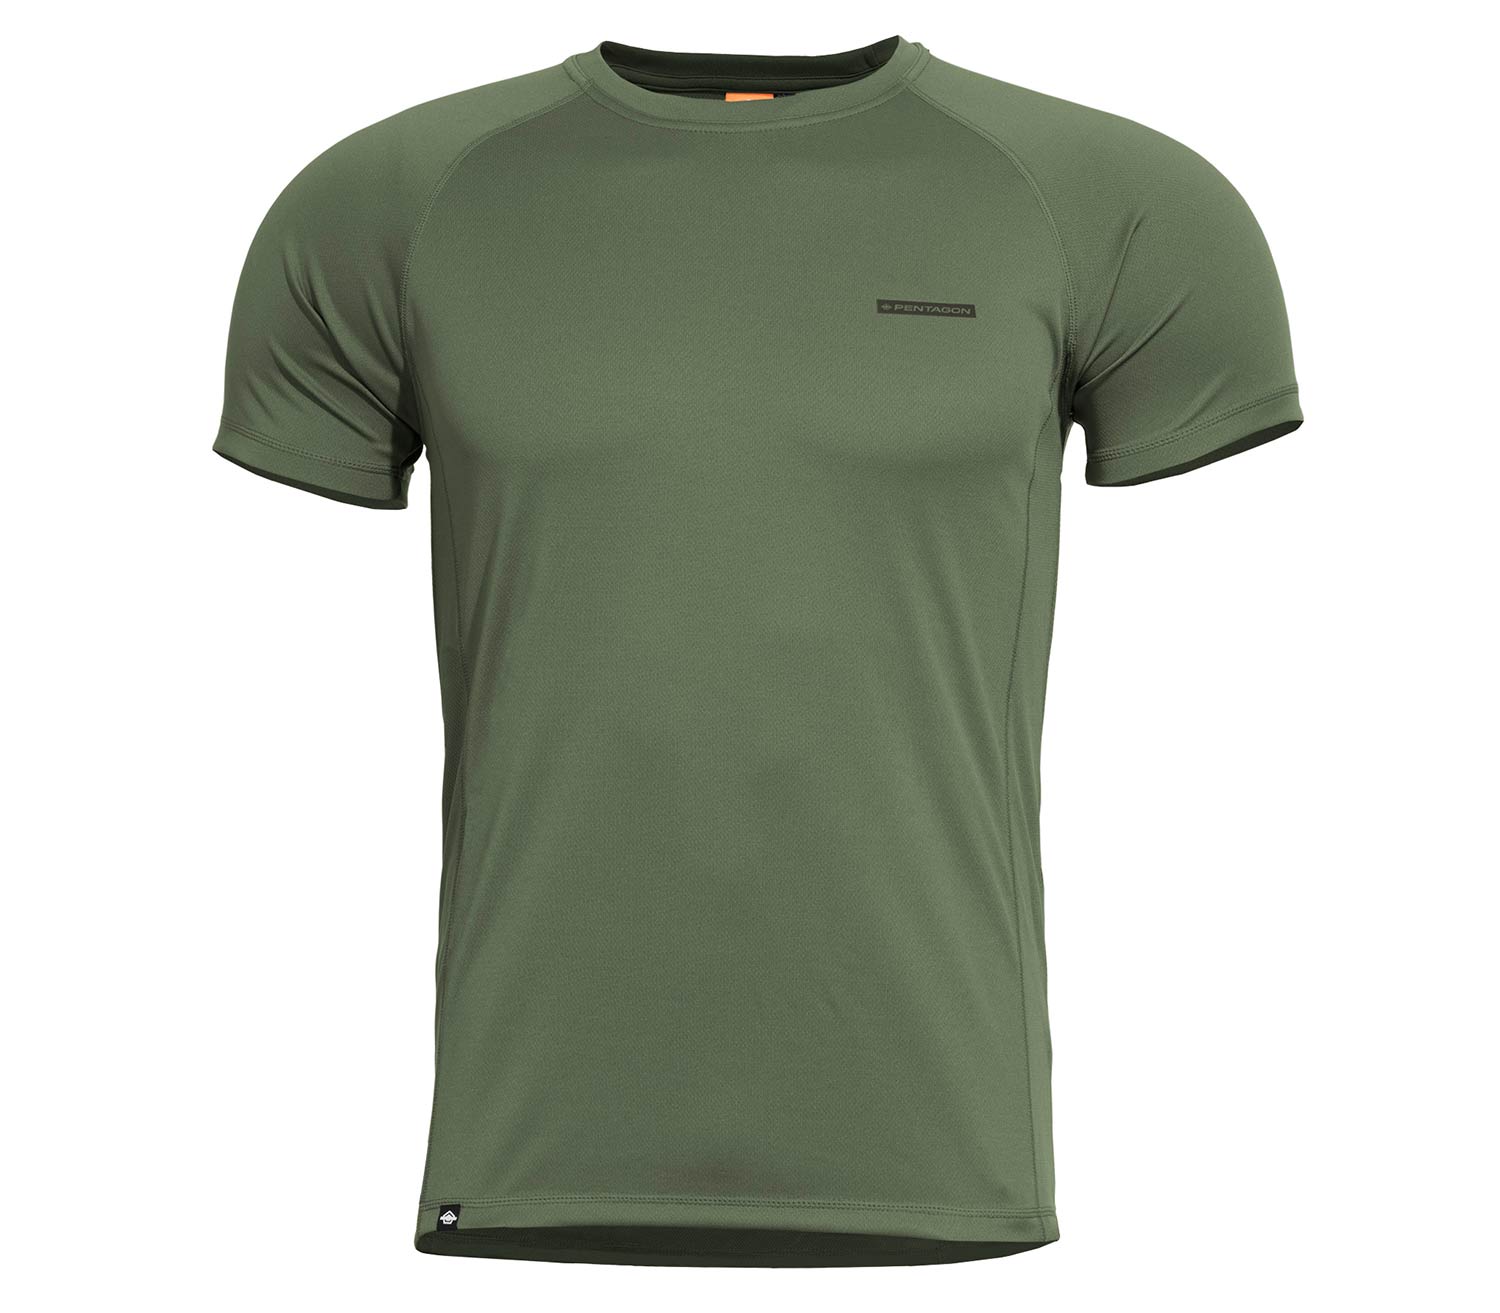 Camiseta Pentagon Body Shock oliva